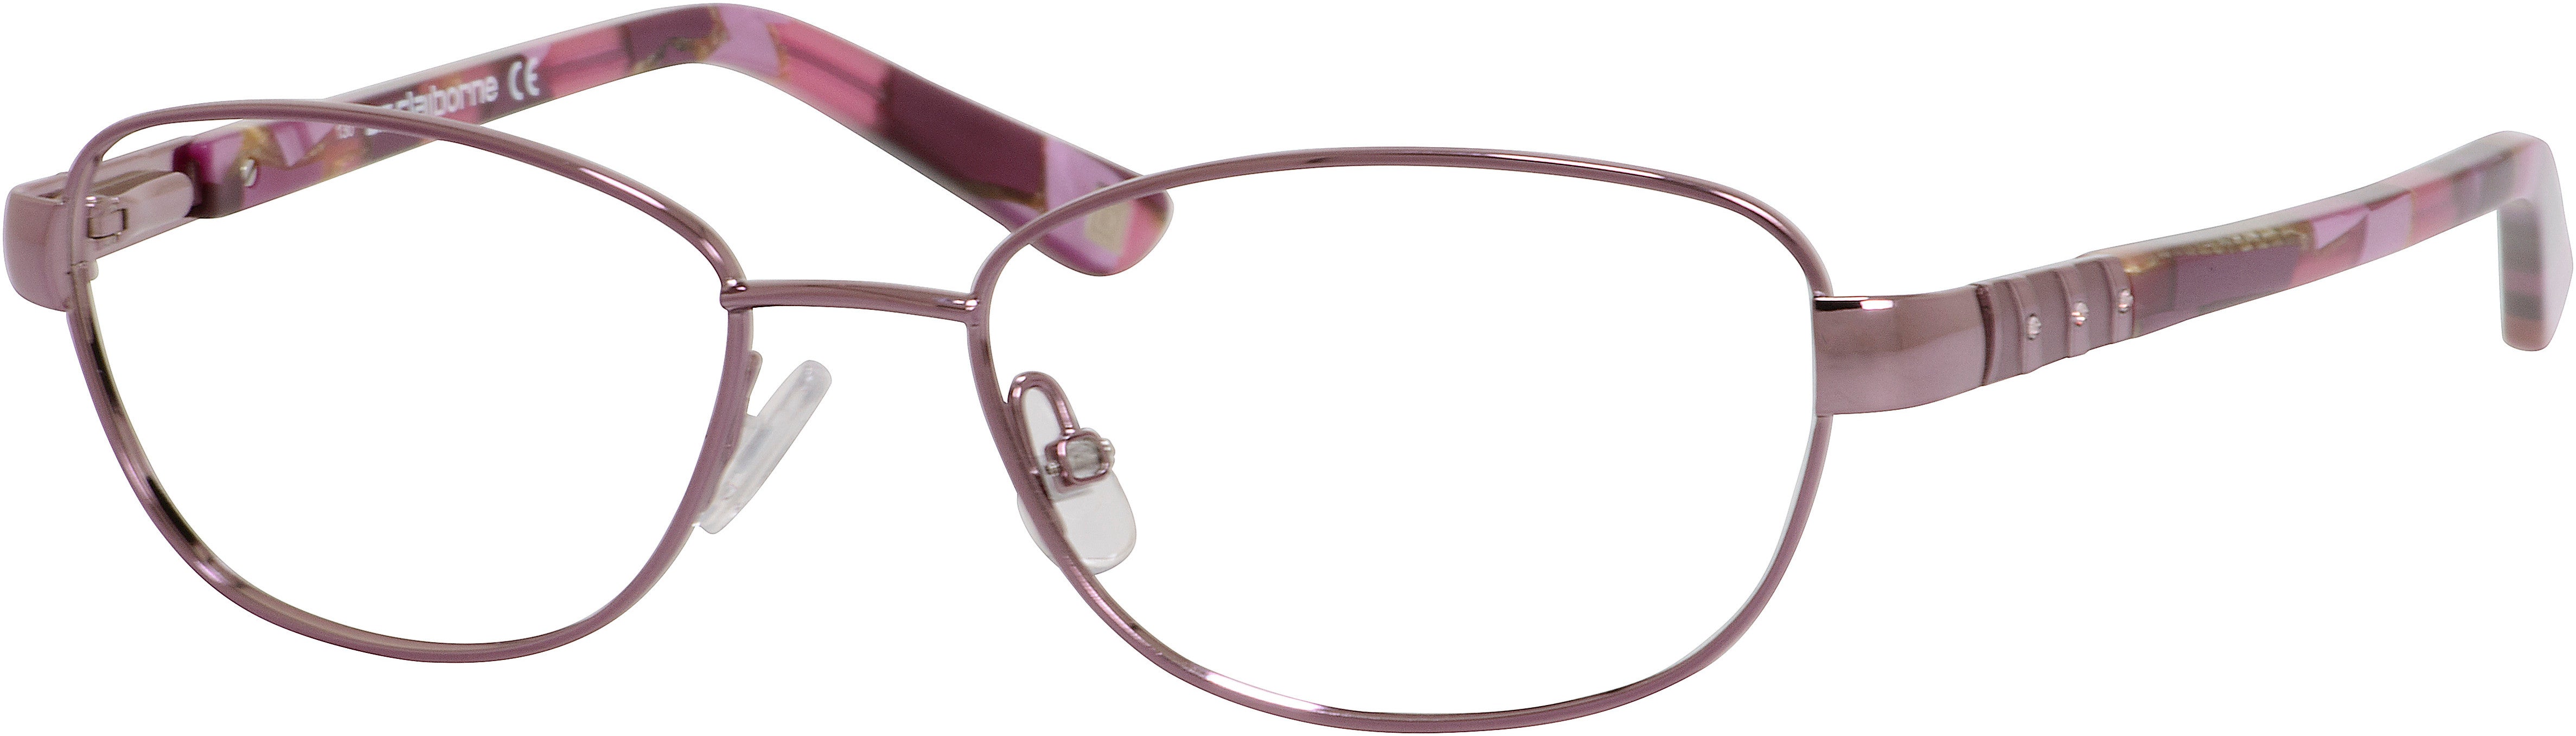  Liz Claiborne 613 Oval Eyeglasses 0NEH-0NEH  Rose (00 Demo Lens)